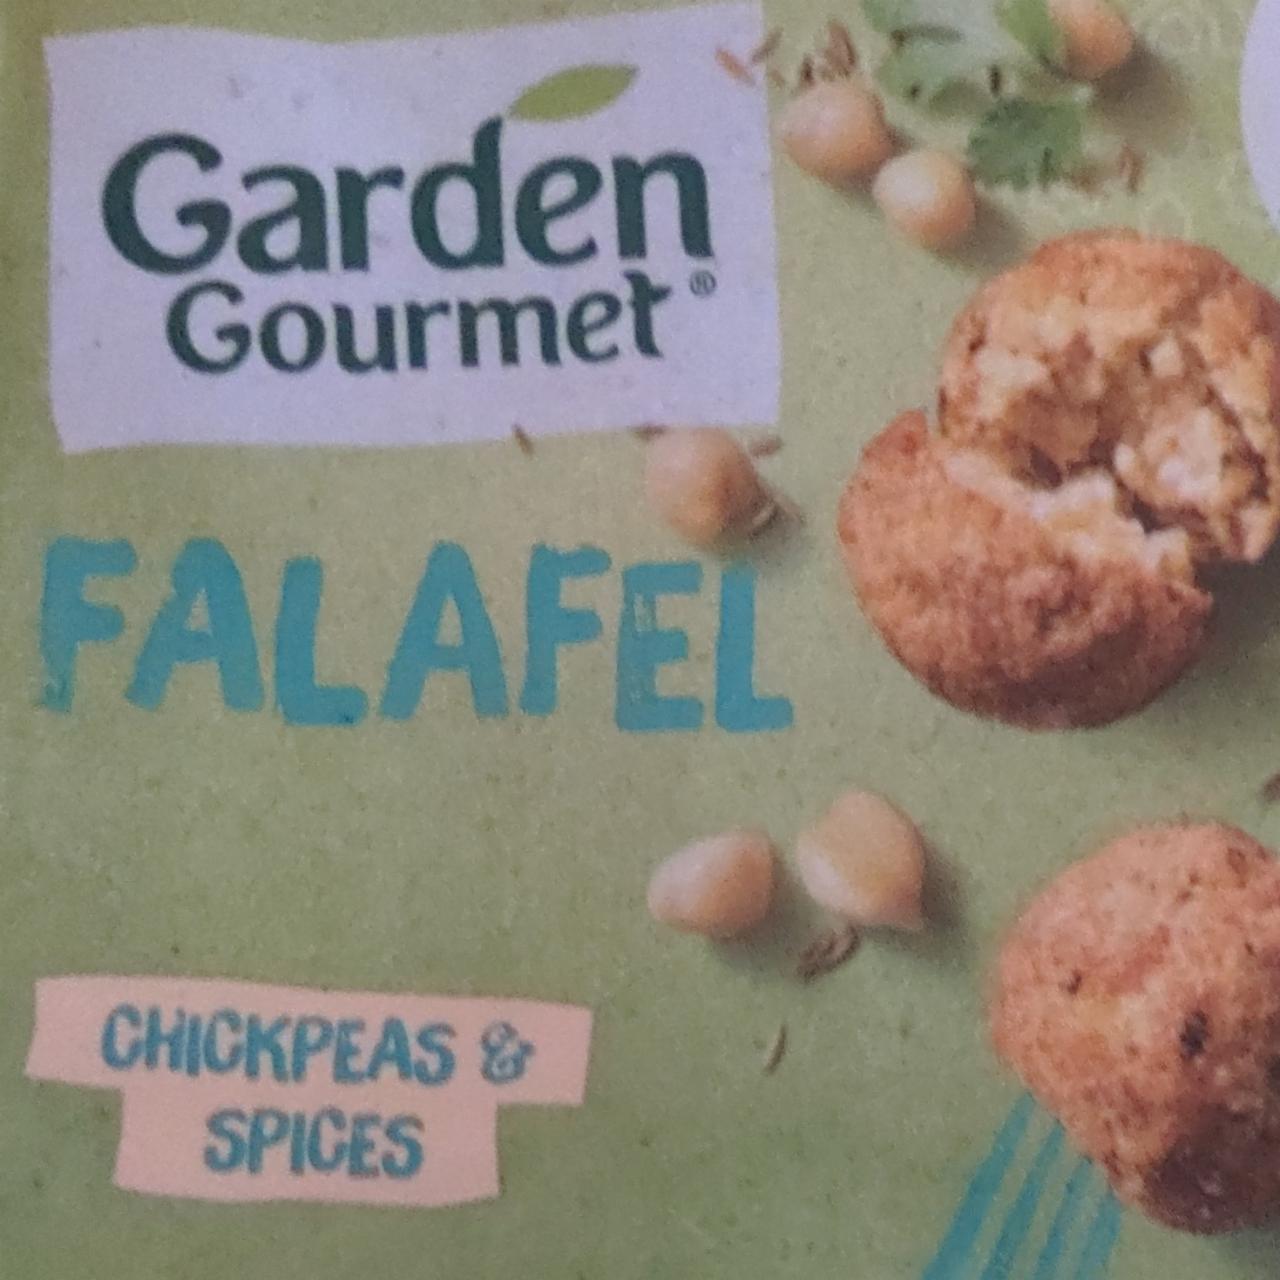 Fotografie - Falafel Garden Gourmet